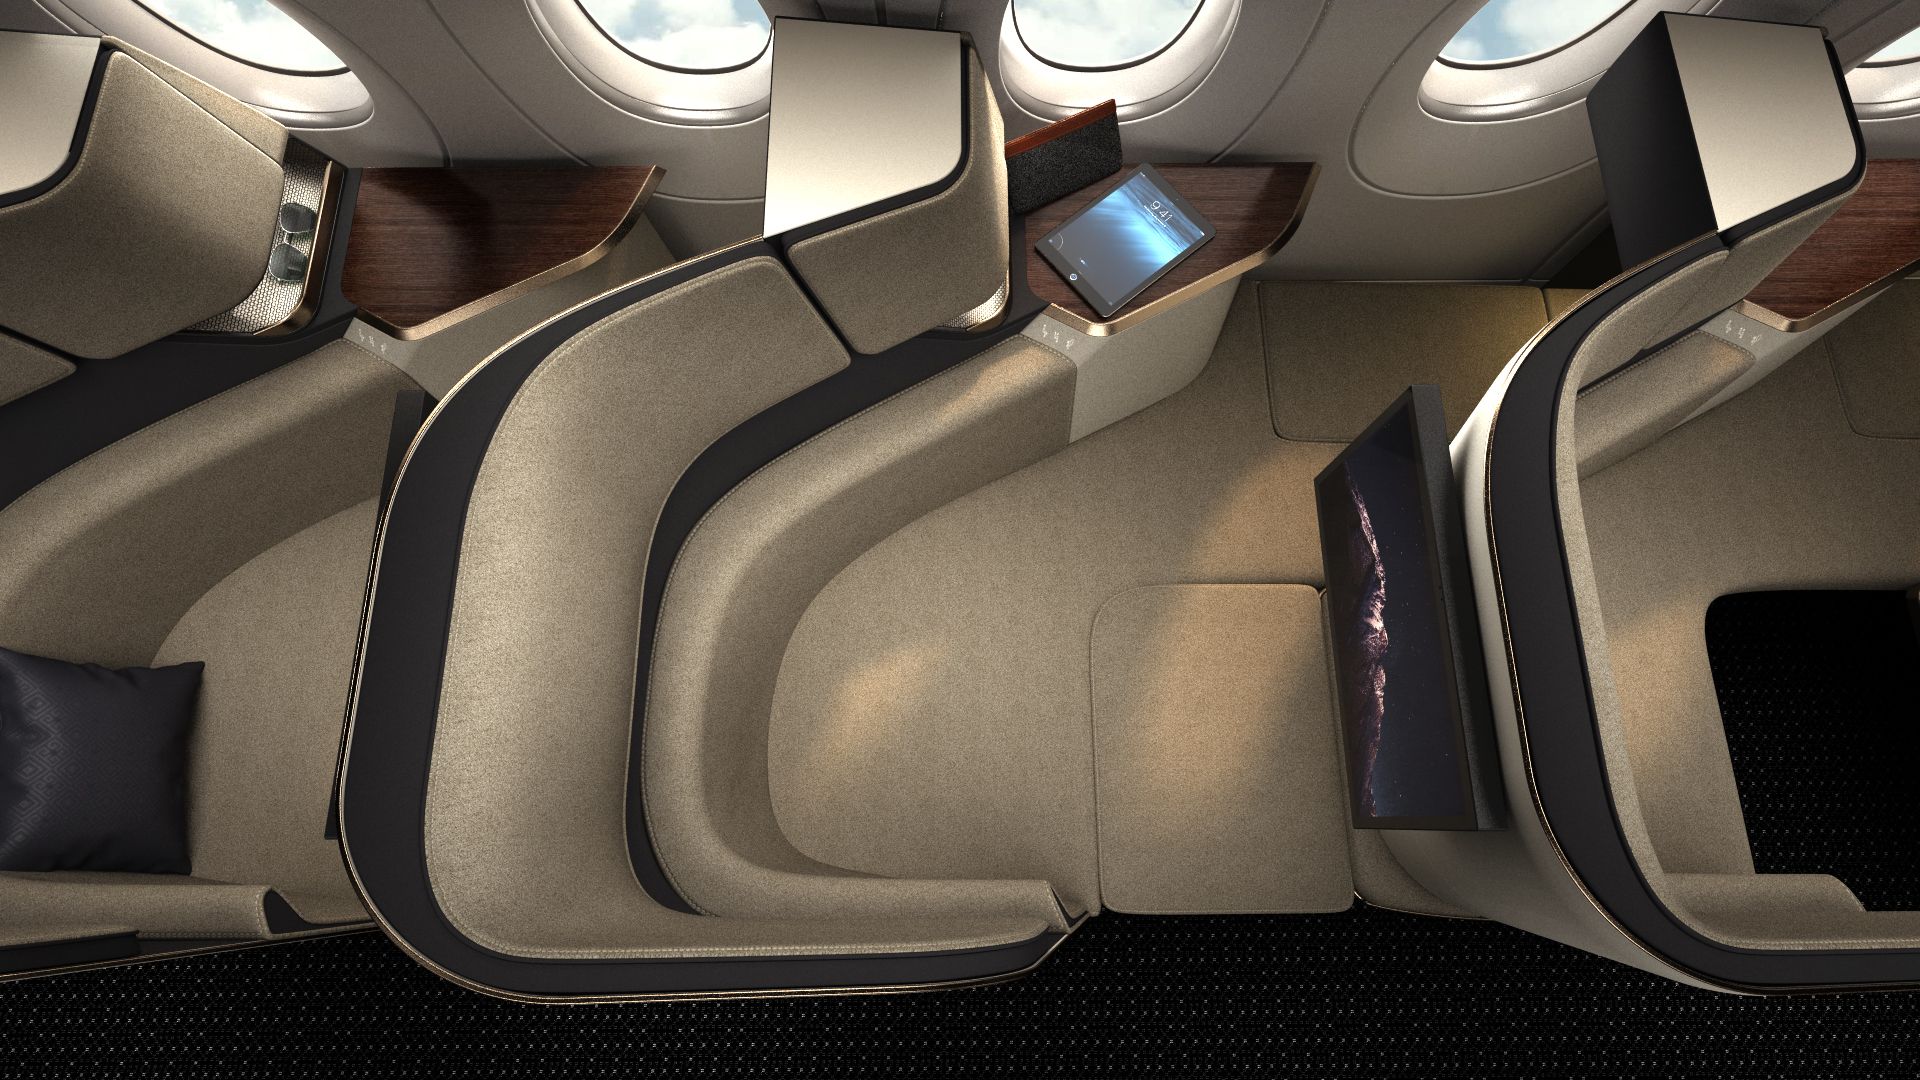 2019's most innovative aircraft cabin ideas - Aircraft Interiors ...